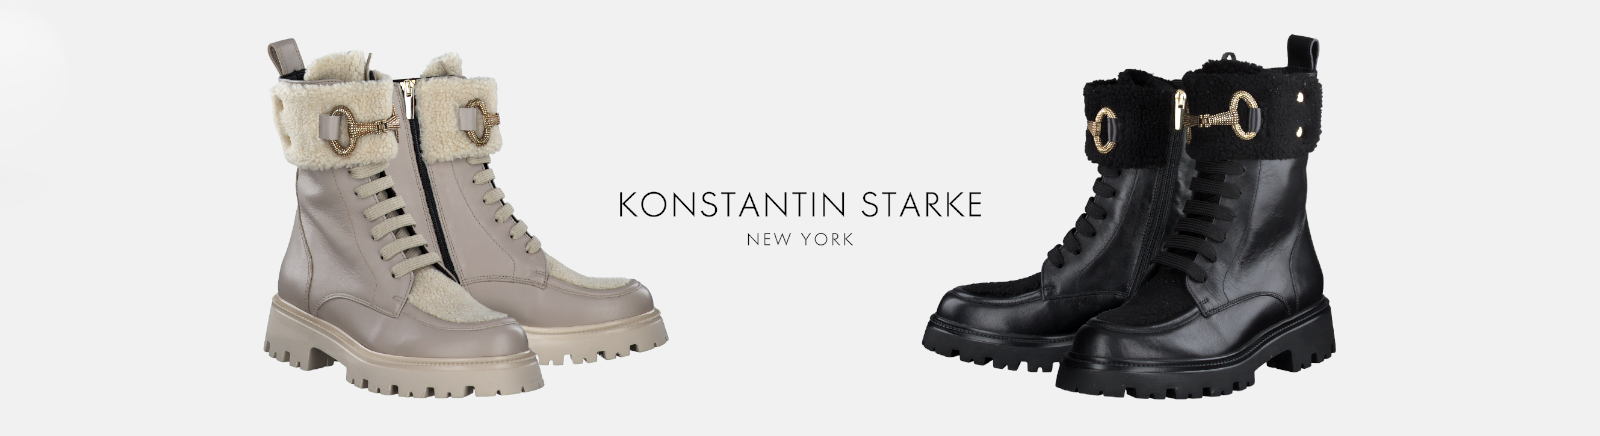 Juppen: Konstantin Starke Pumps Schuhe online kaufen online shoppen